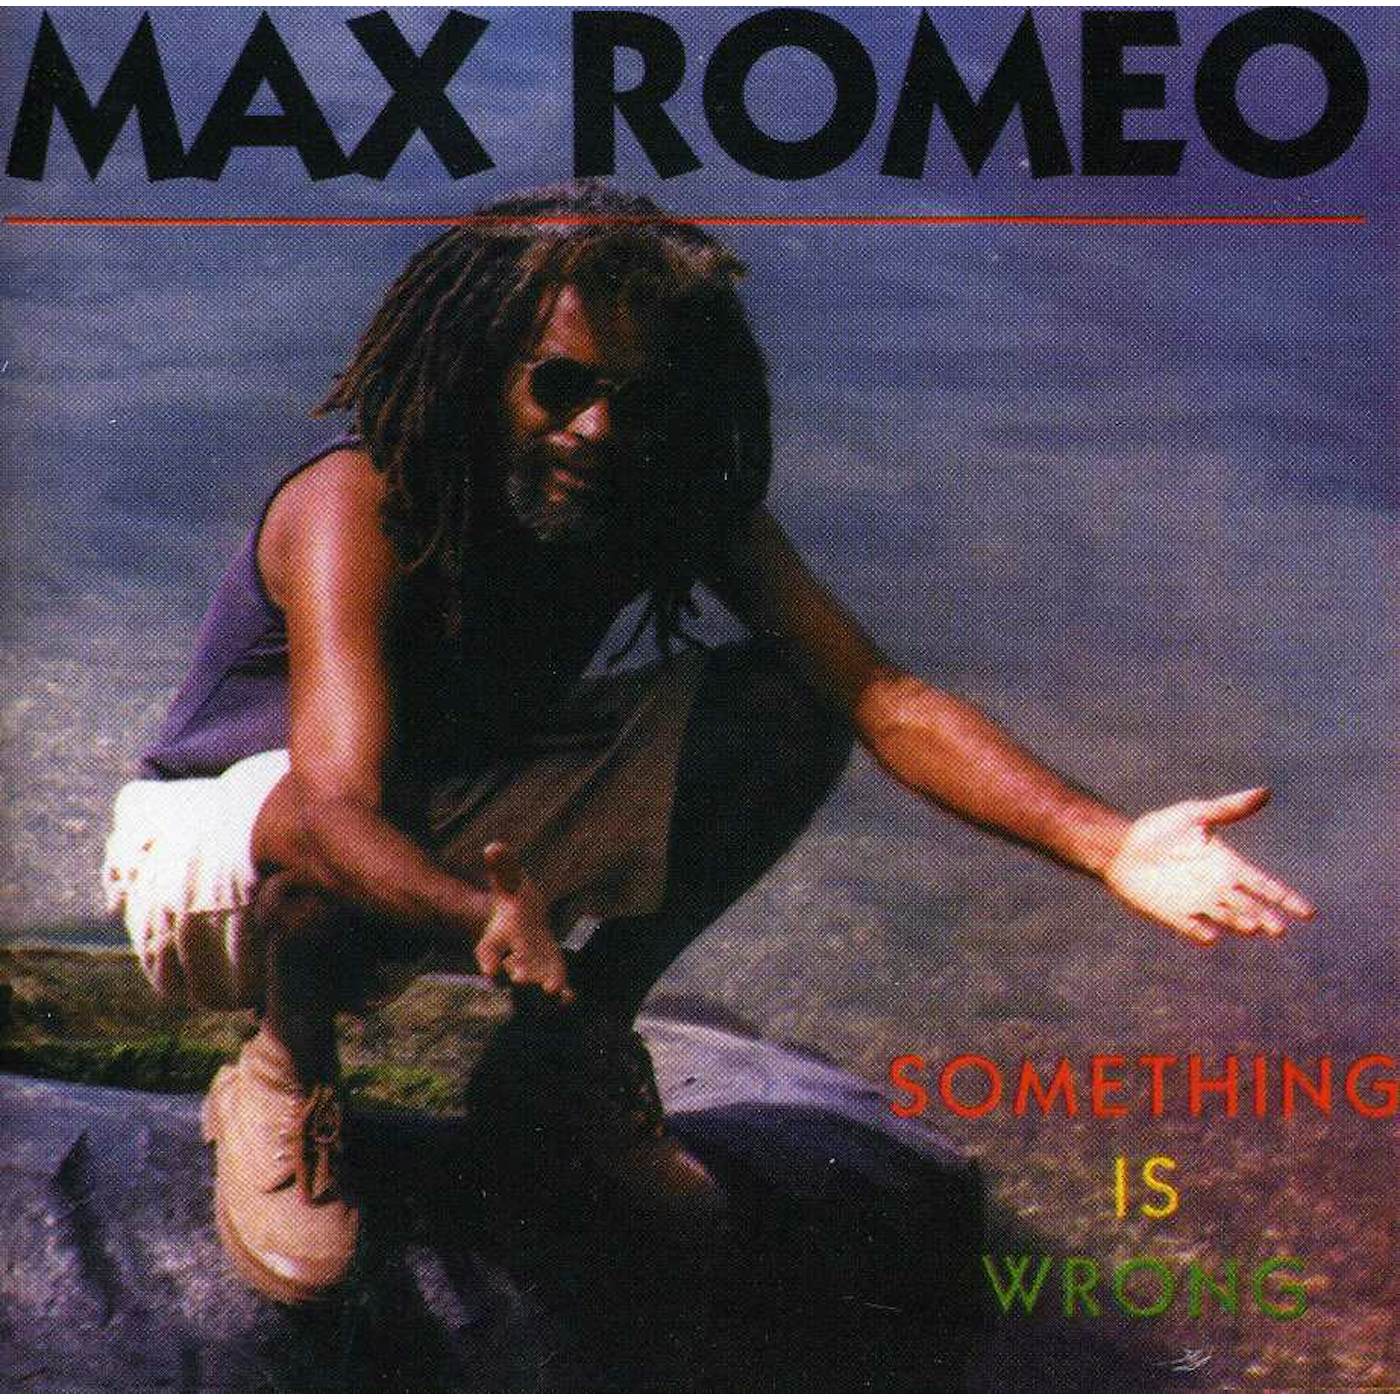 Max Romeo SOMETHING IS WRONG CD